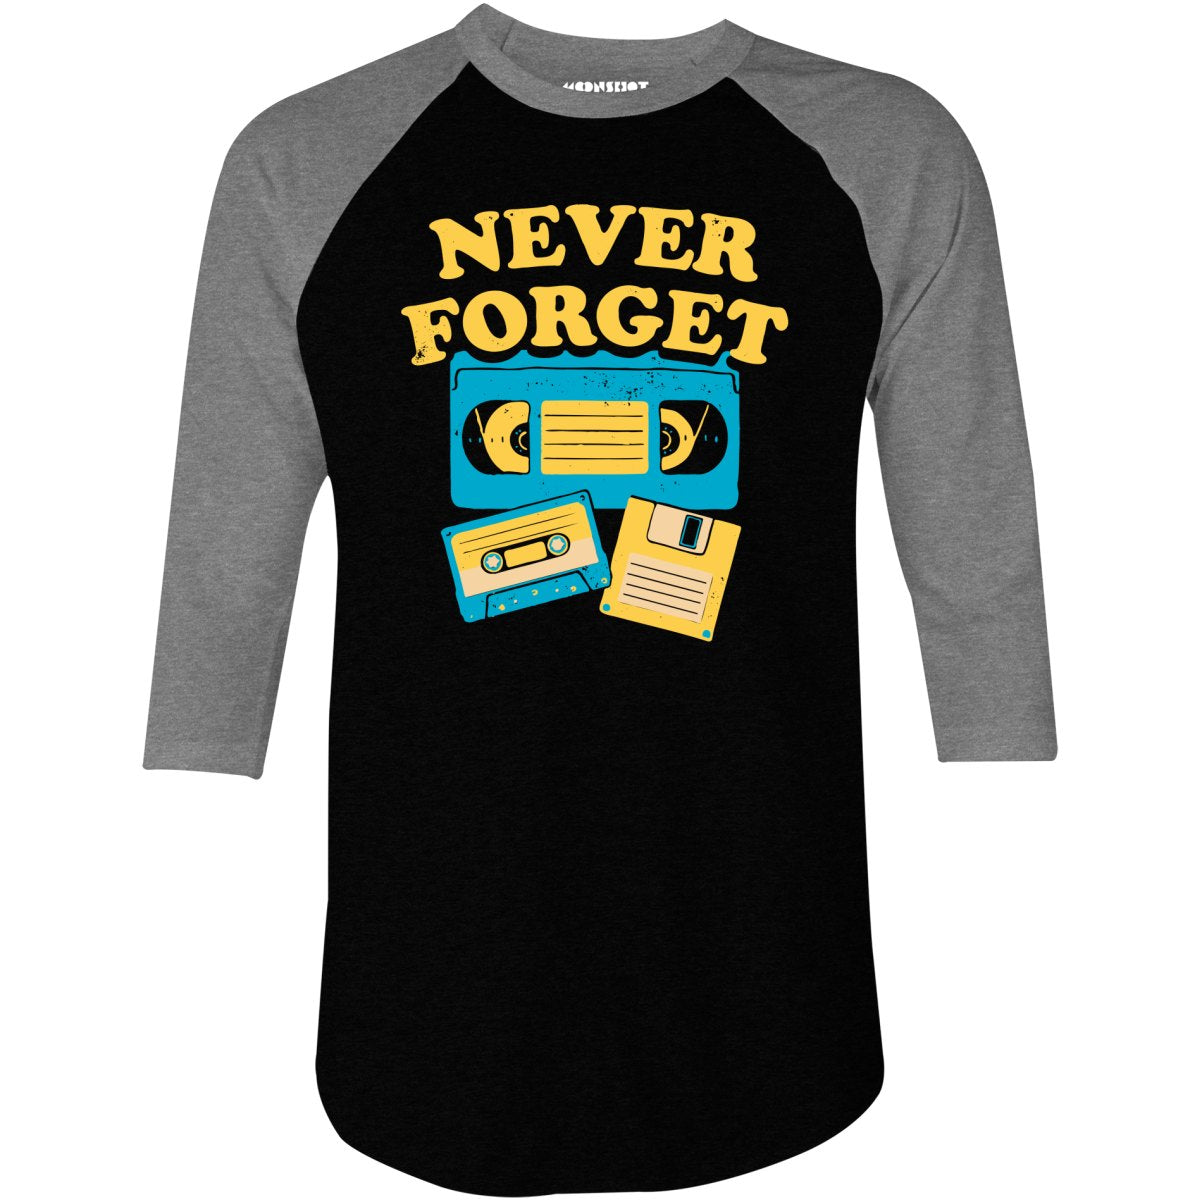 Never Forget - 3/4 Sleeve Raglan T-Shirt